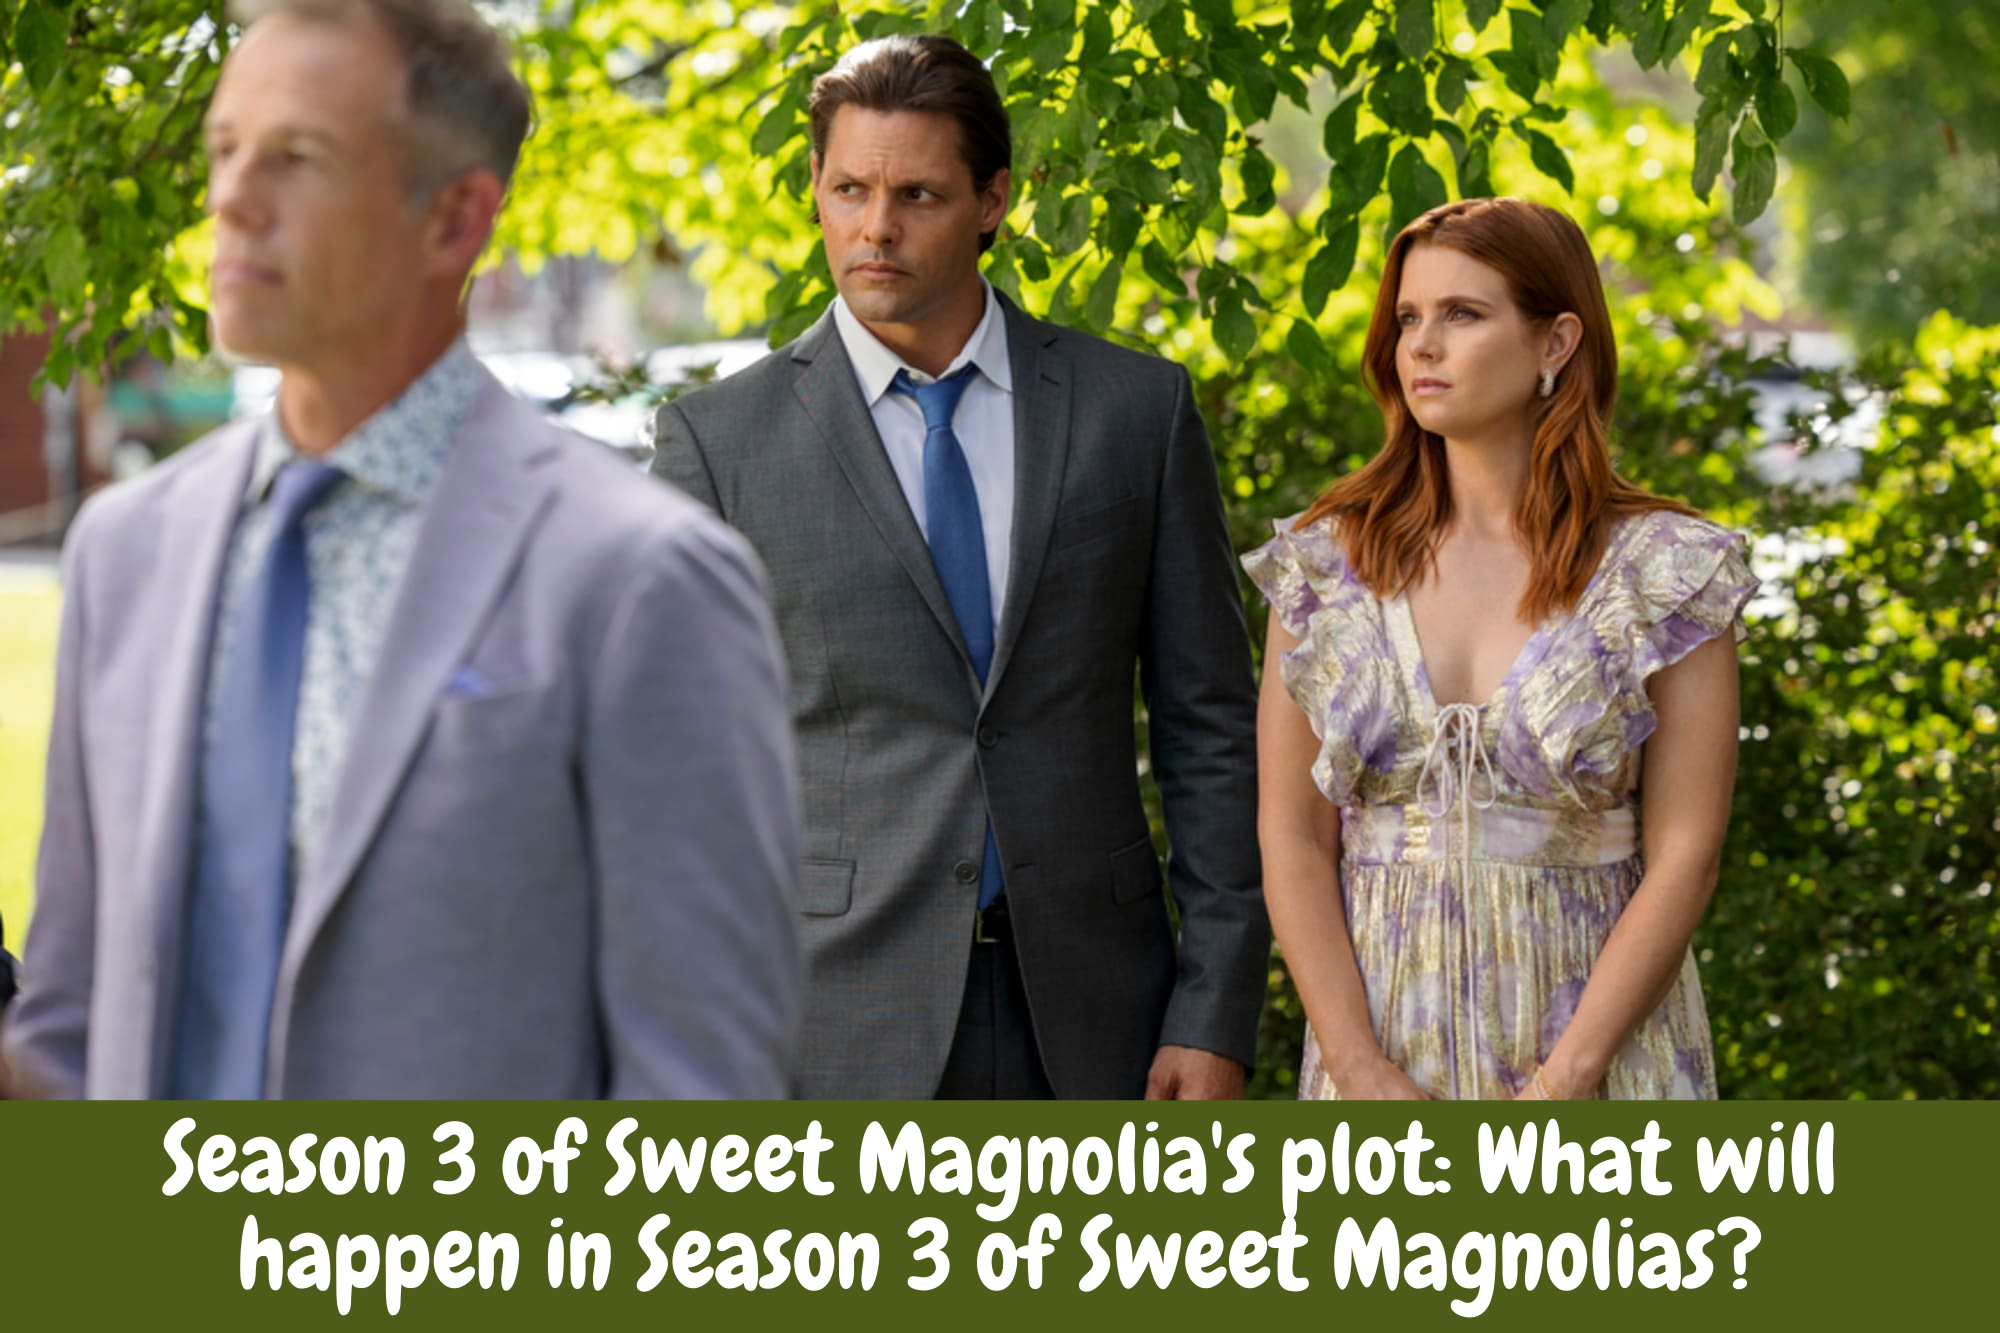 Season 3 of Sweet Magnolia's plot: What will happen in Season 3 of Sweet Magnolias?